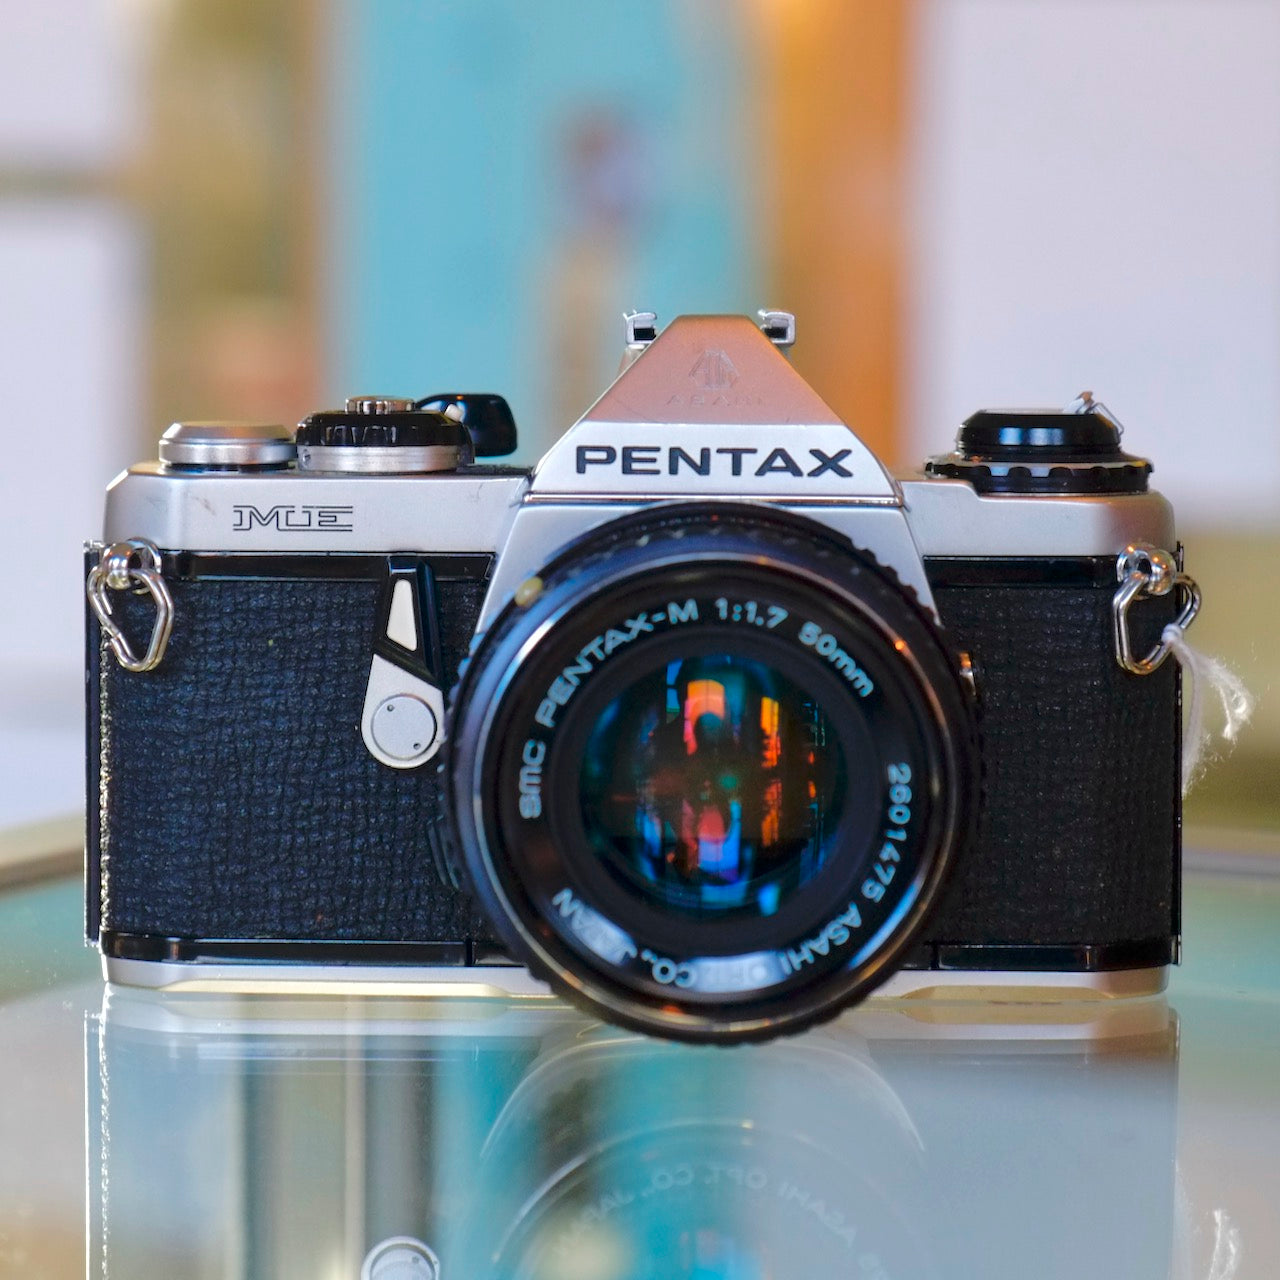 Pentax ME with SMC Pentax-M 50mm f/1.7